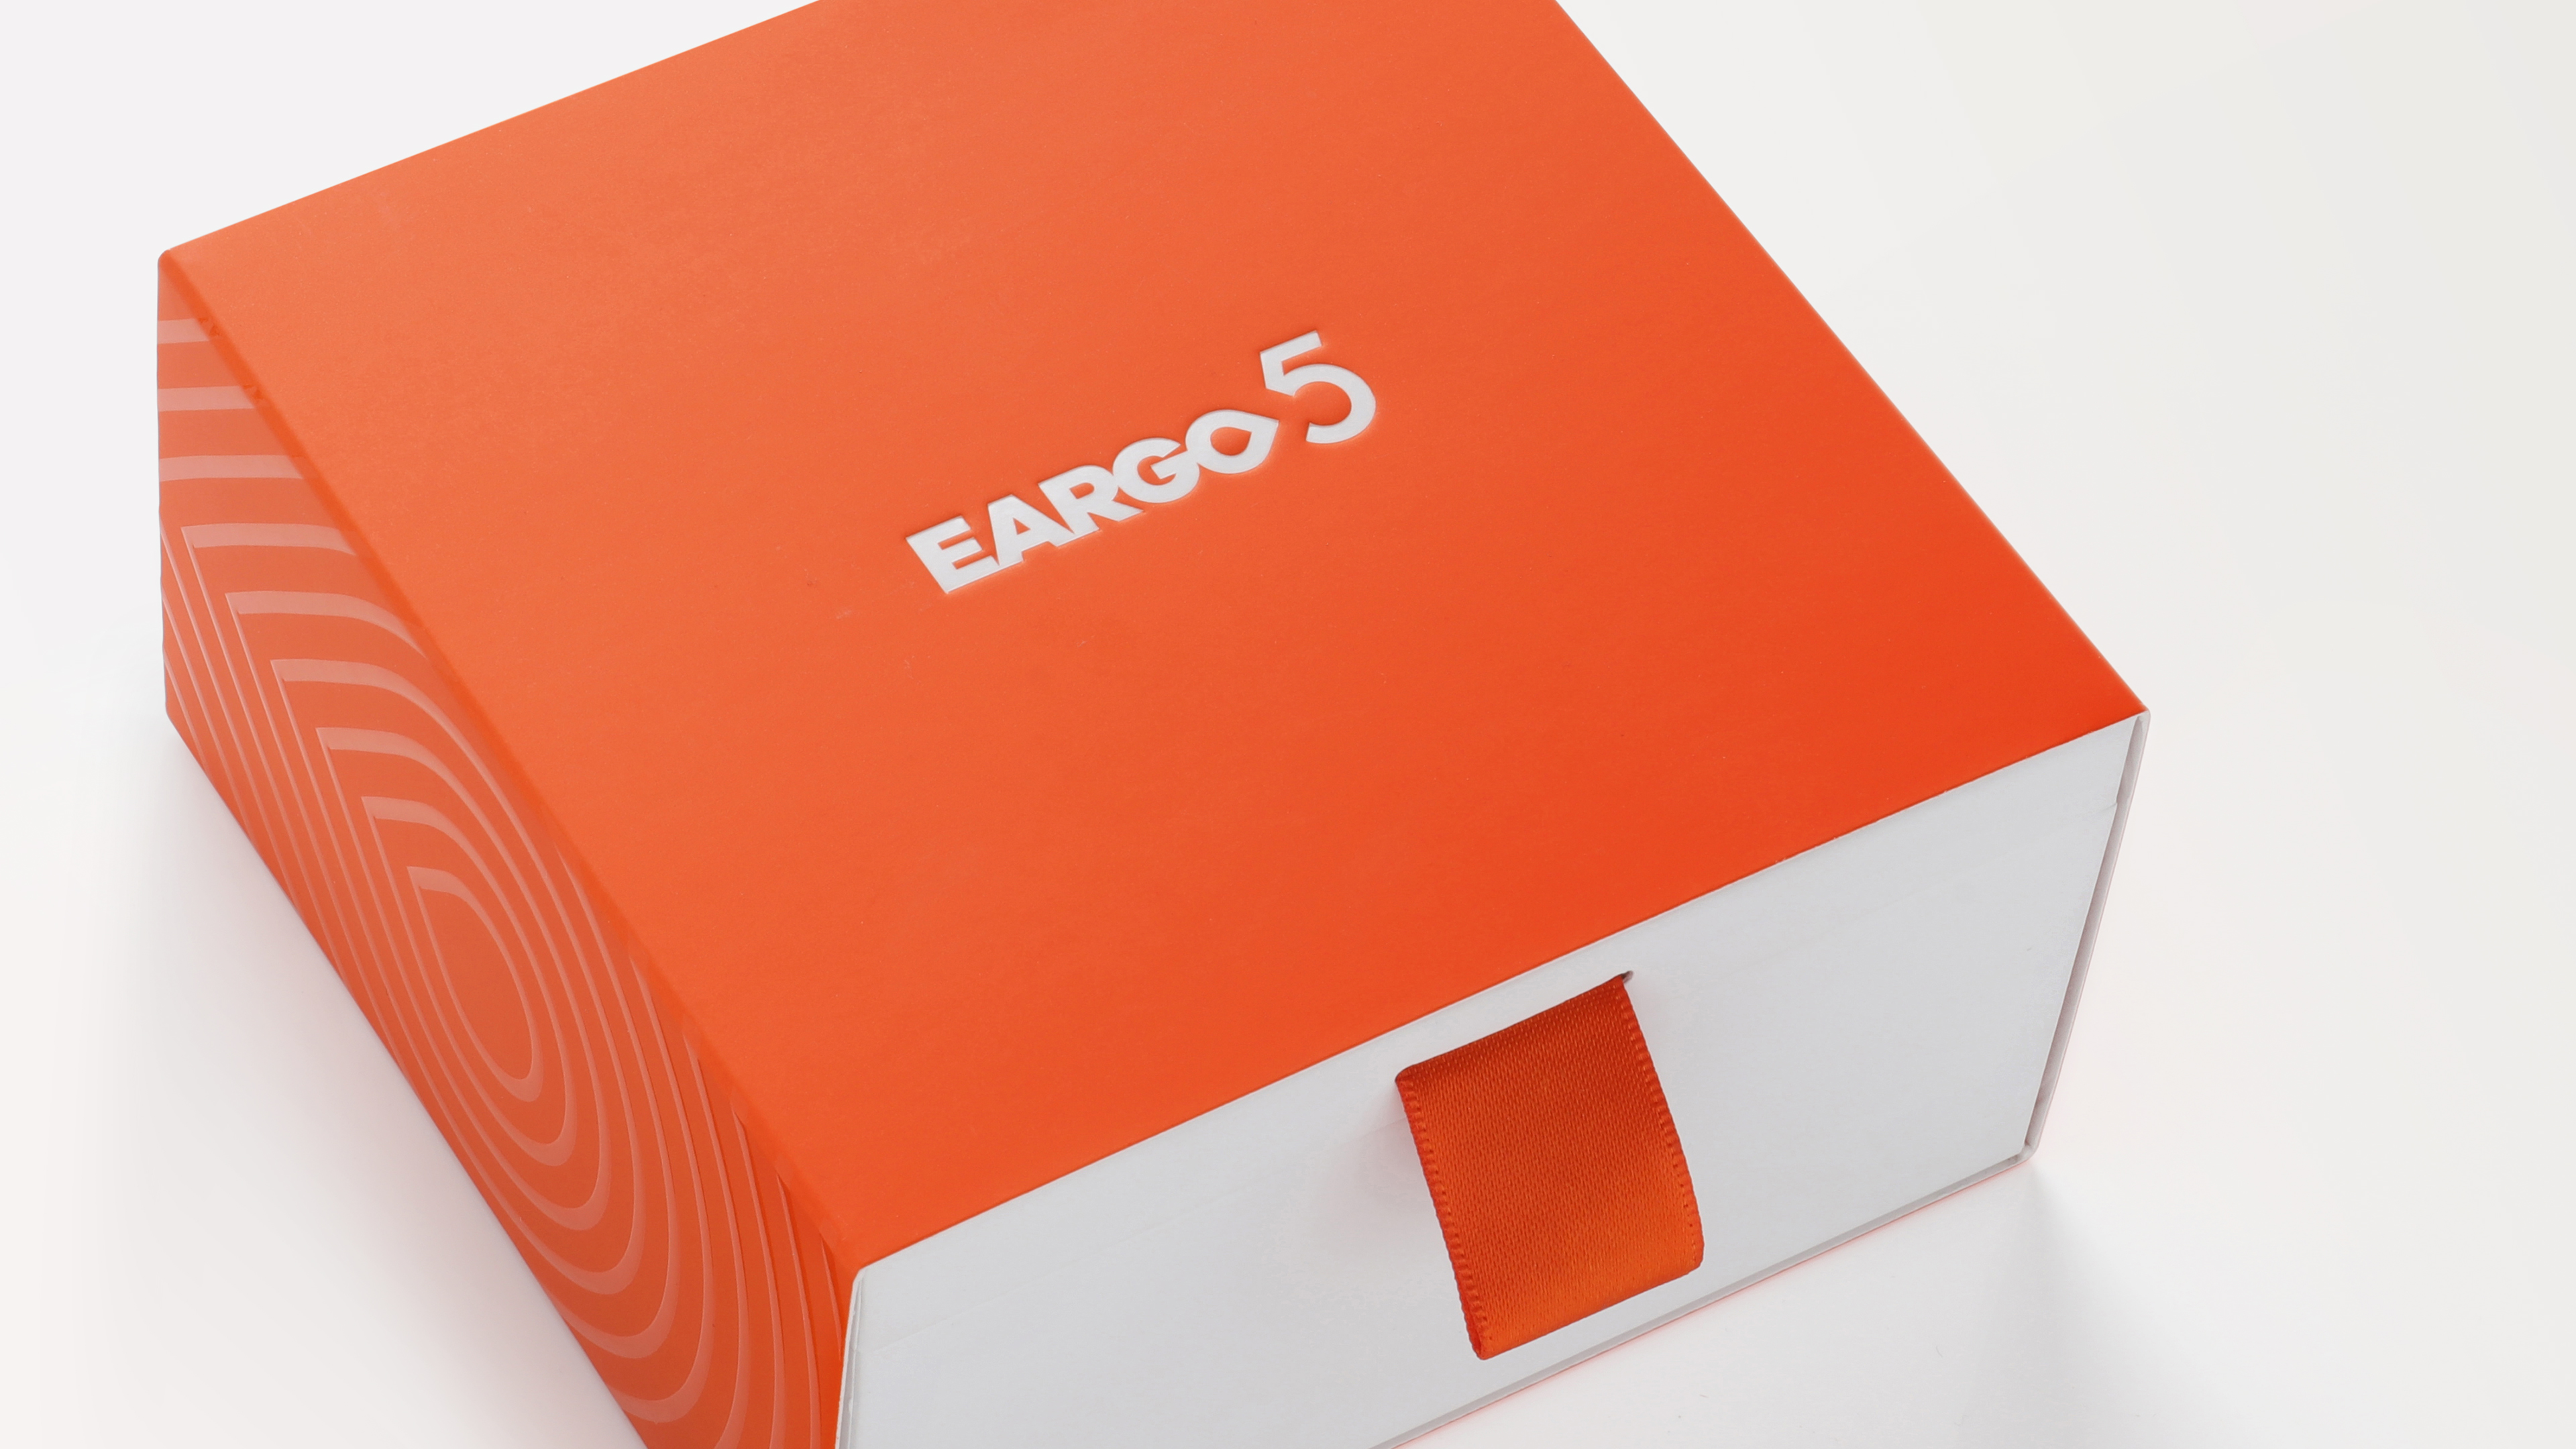 Eargo 5 packaging design